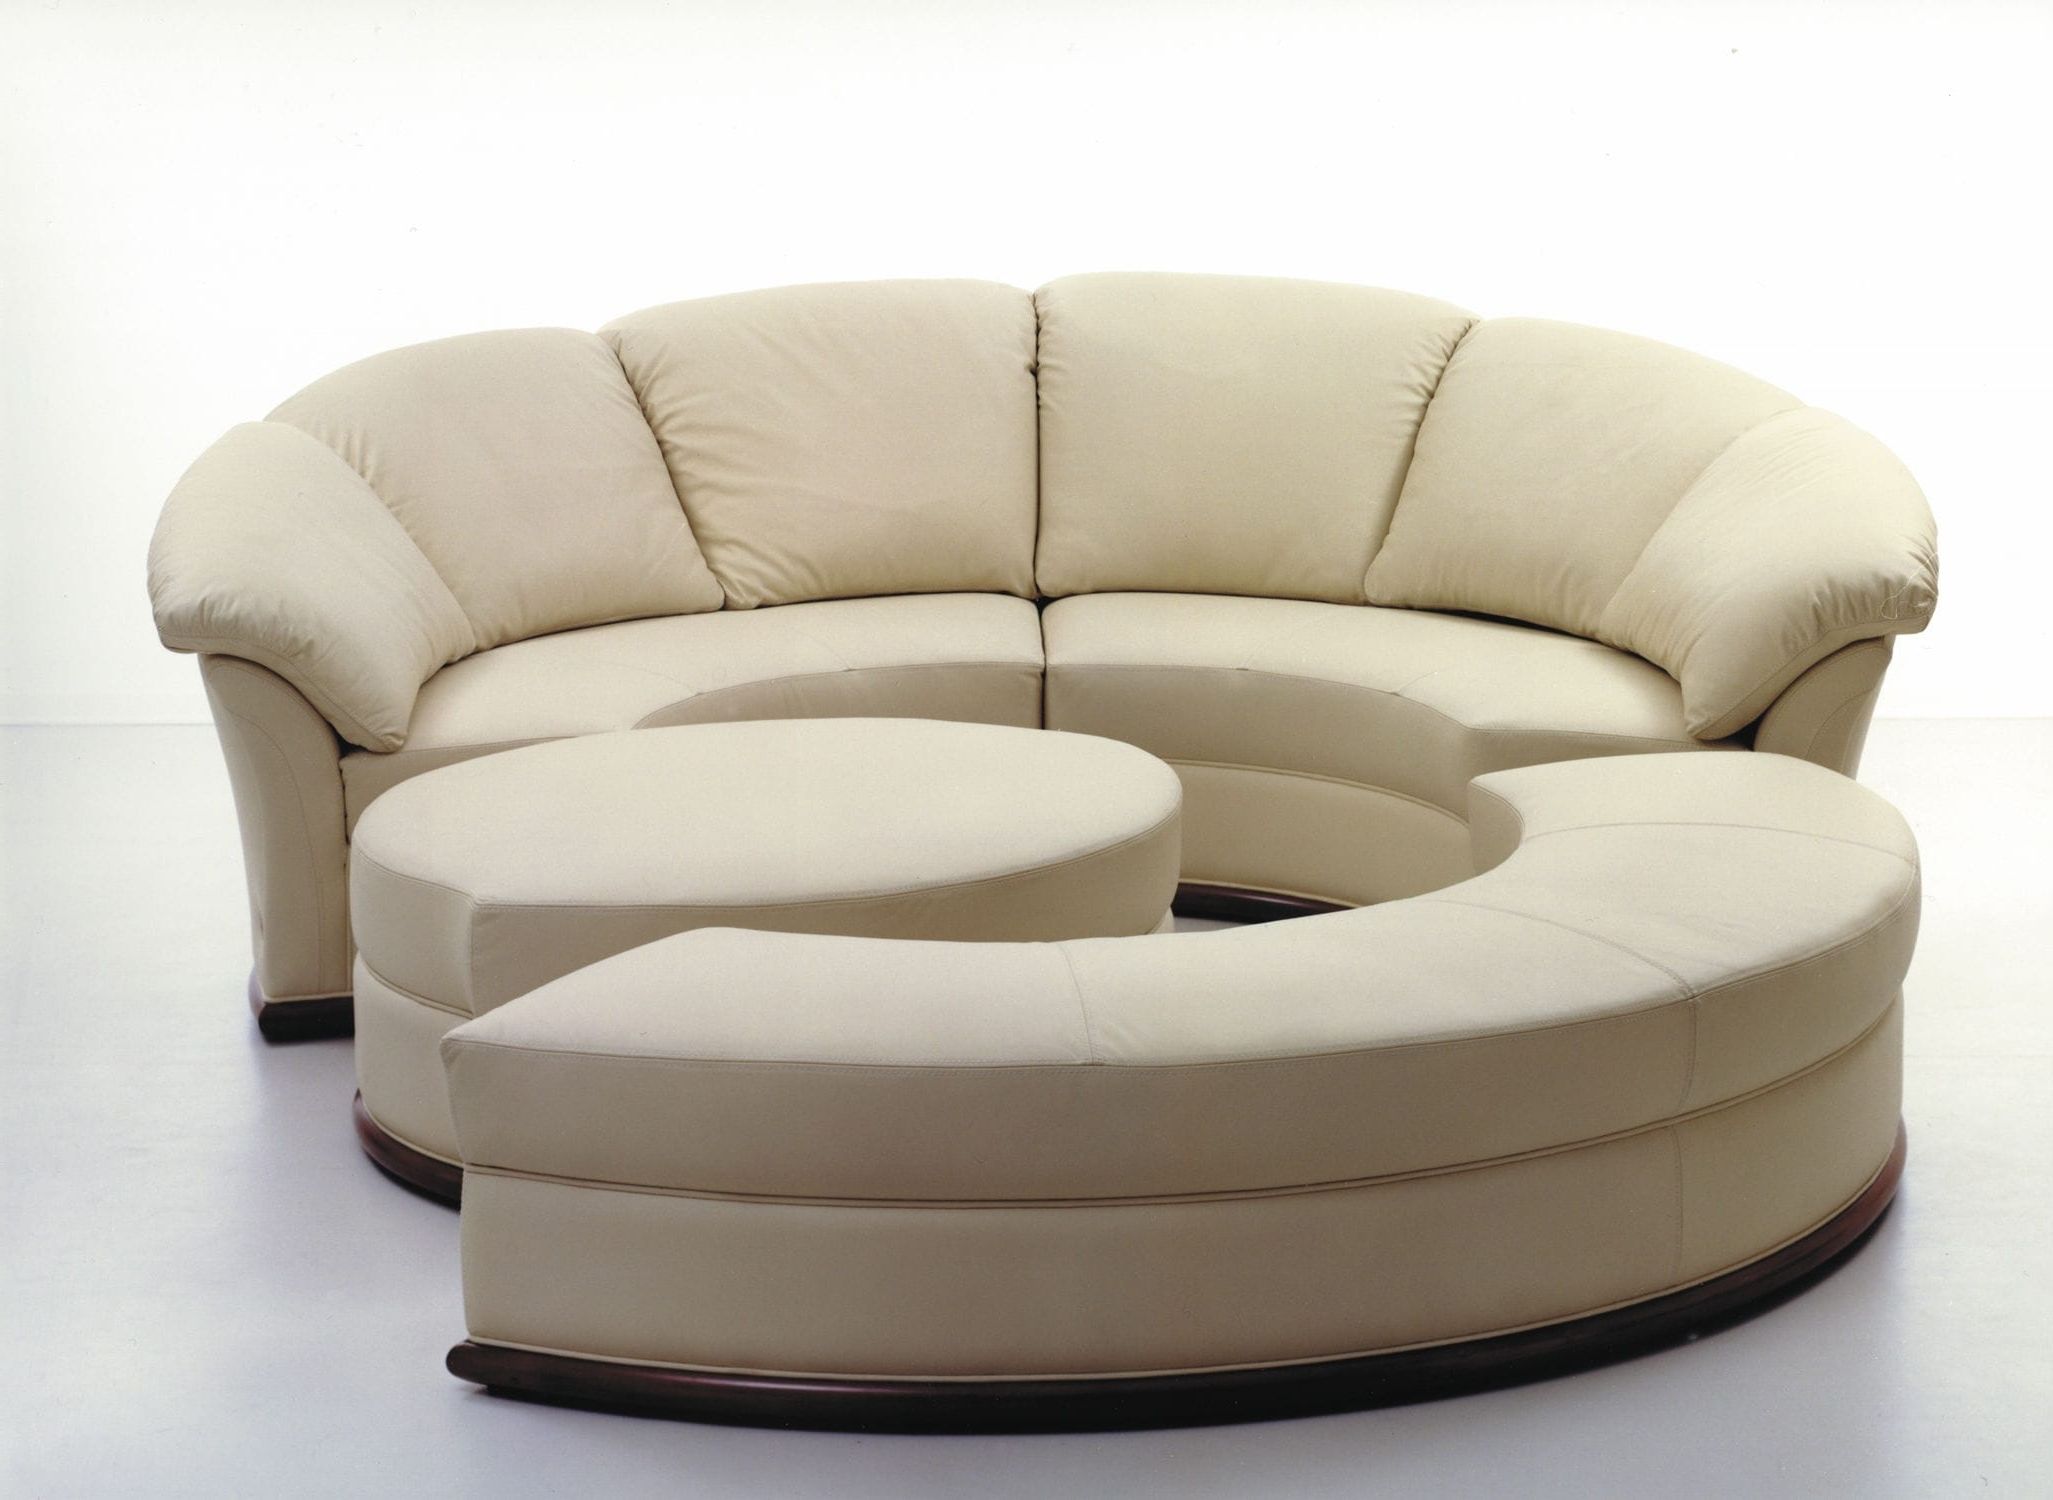 Sofa : Layout 1 Round Sofa Chair Mid Century Modern Sofa‚ Black Regarding Favorite Round Sofas (View 17 of 20)